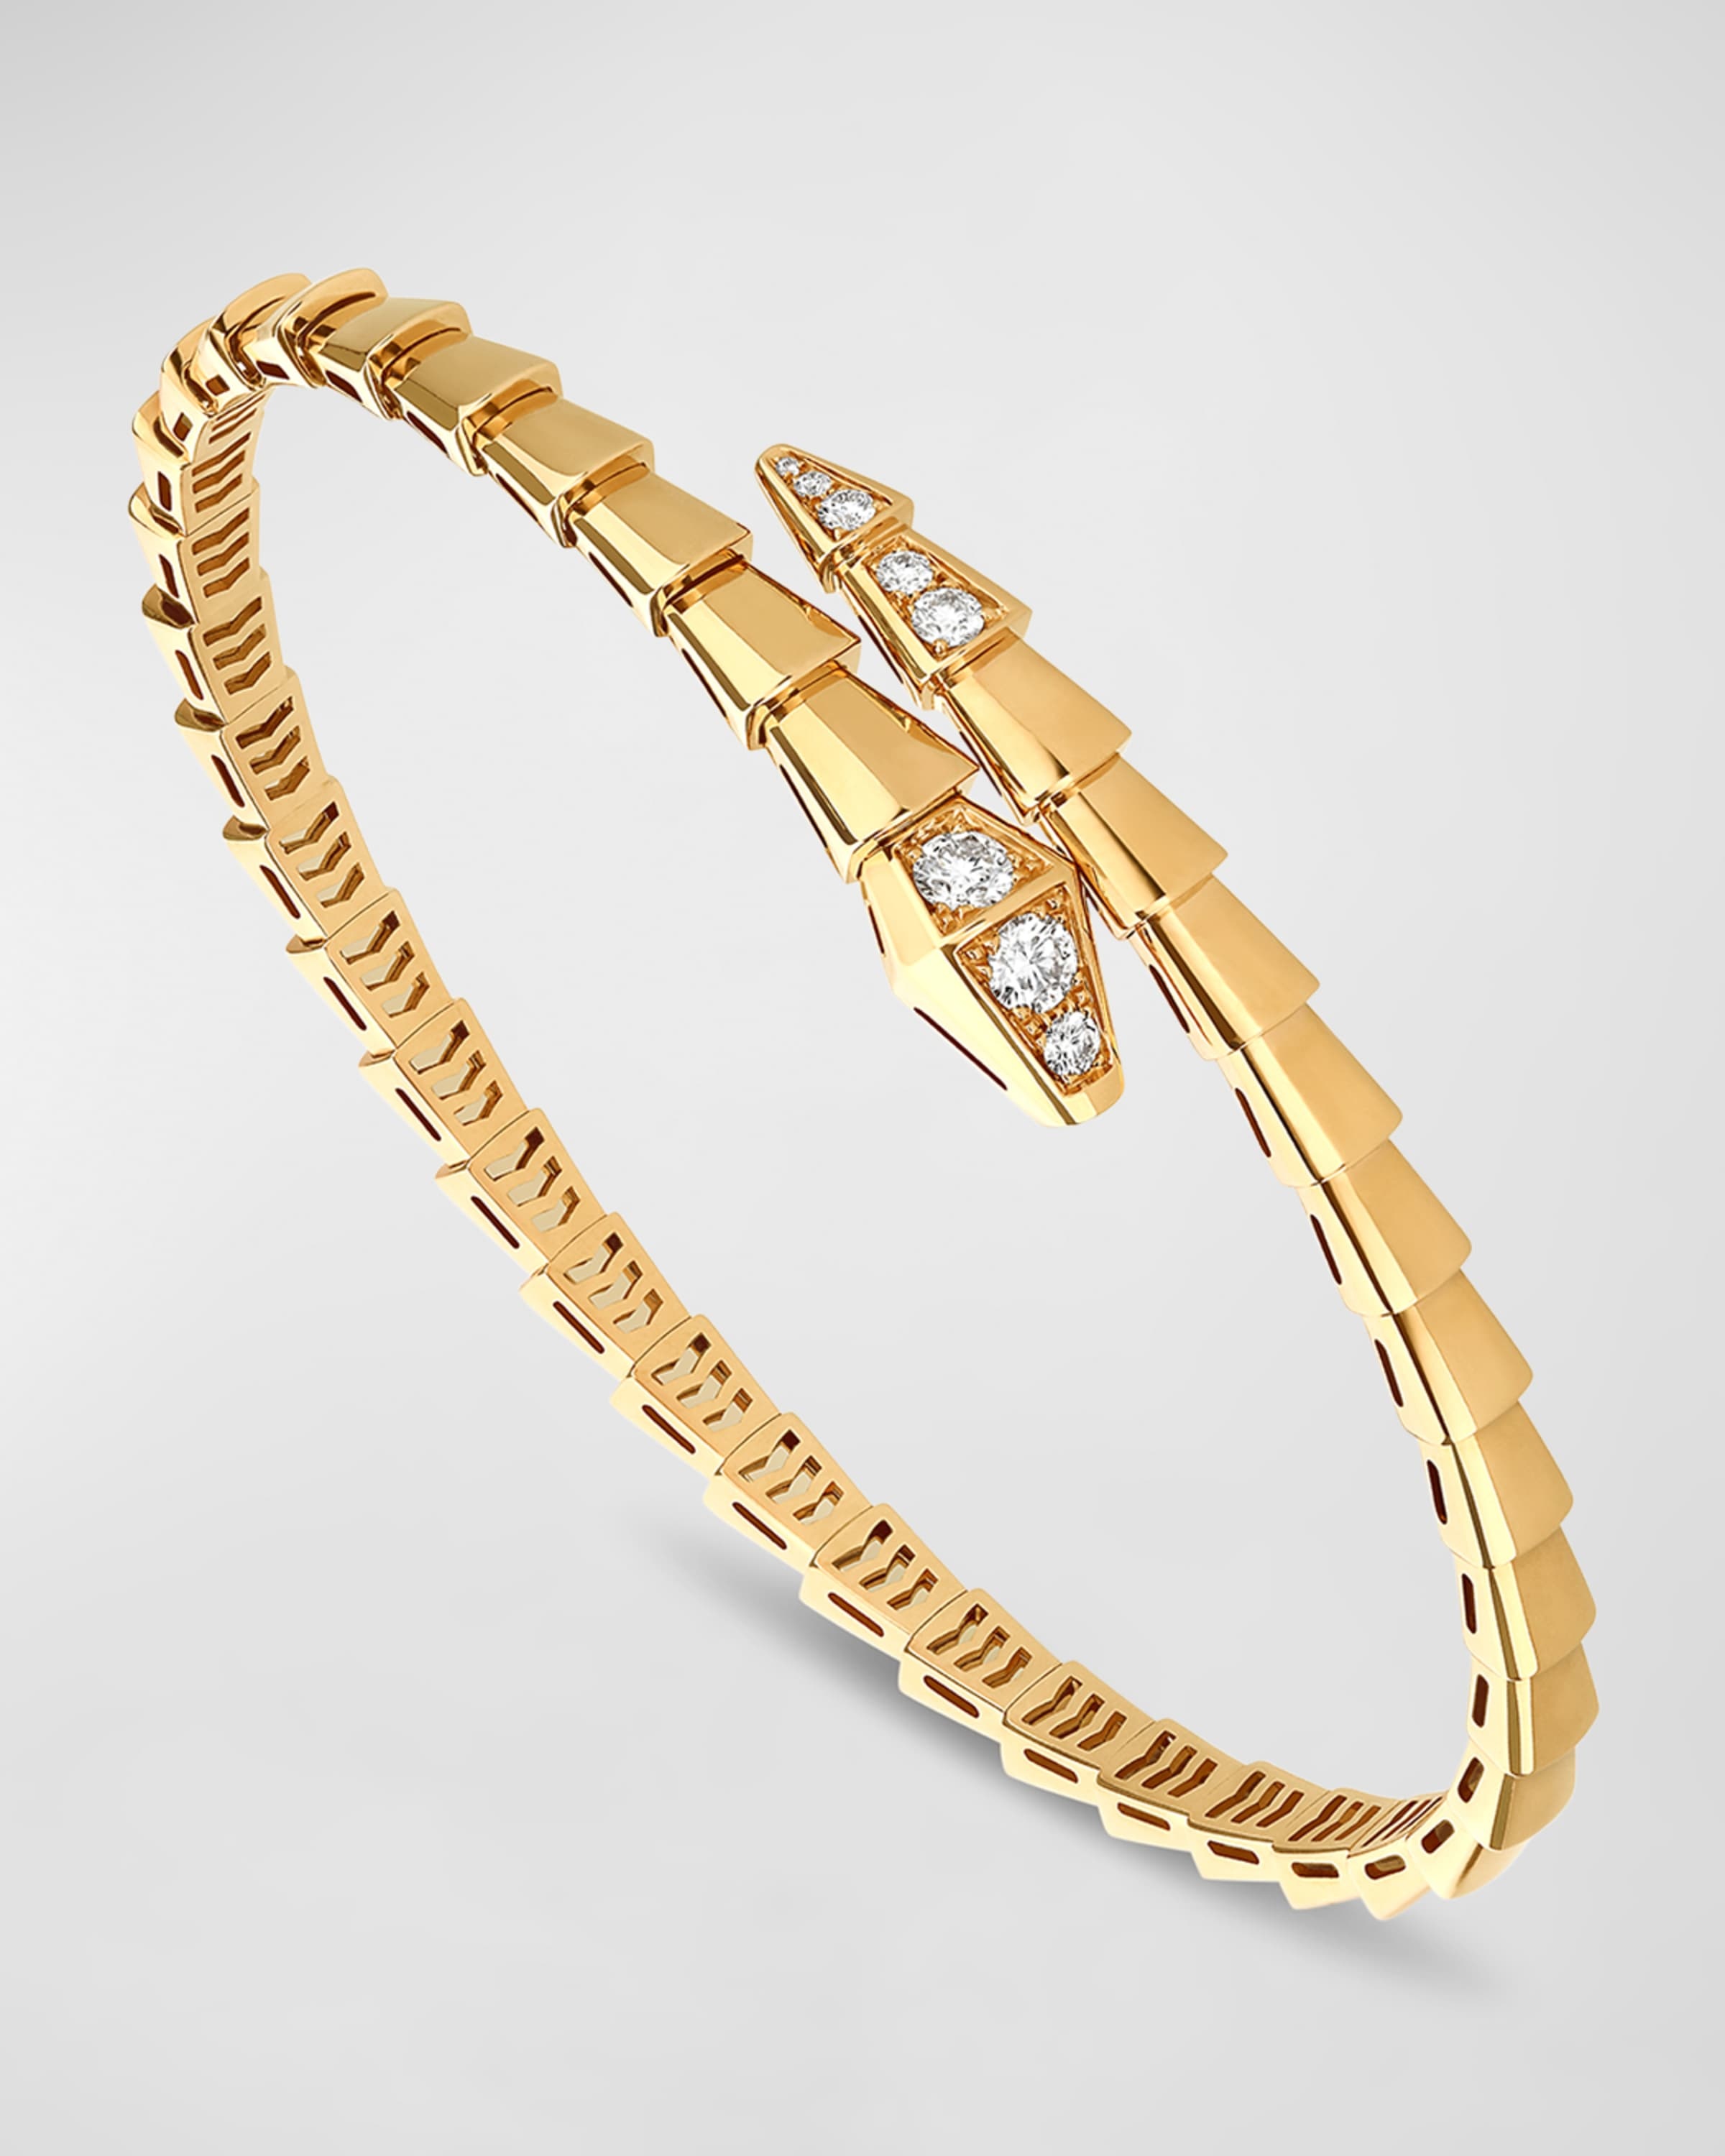 Serpenti Viper 18K Yellow Gold Bracelet with Diamonds, Size L - 1